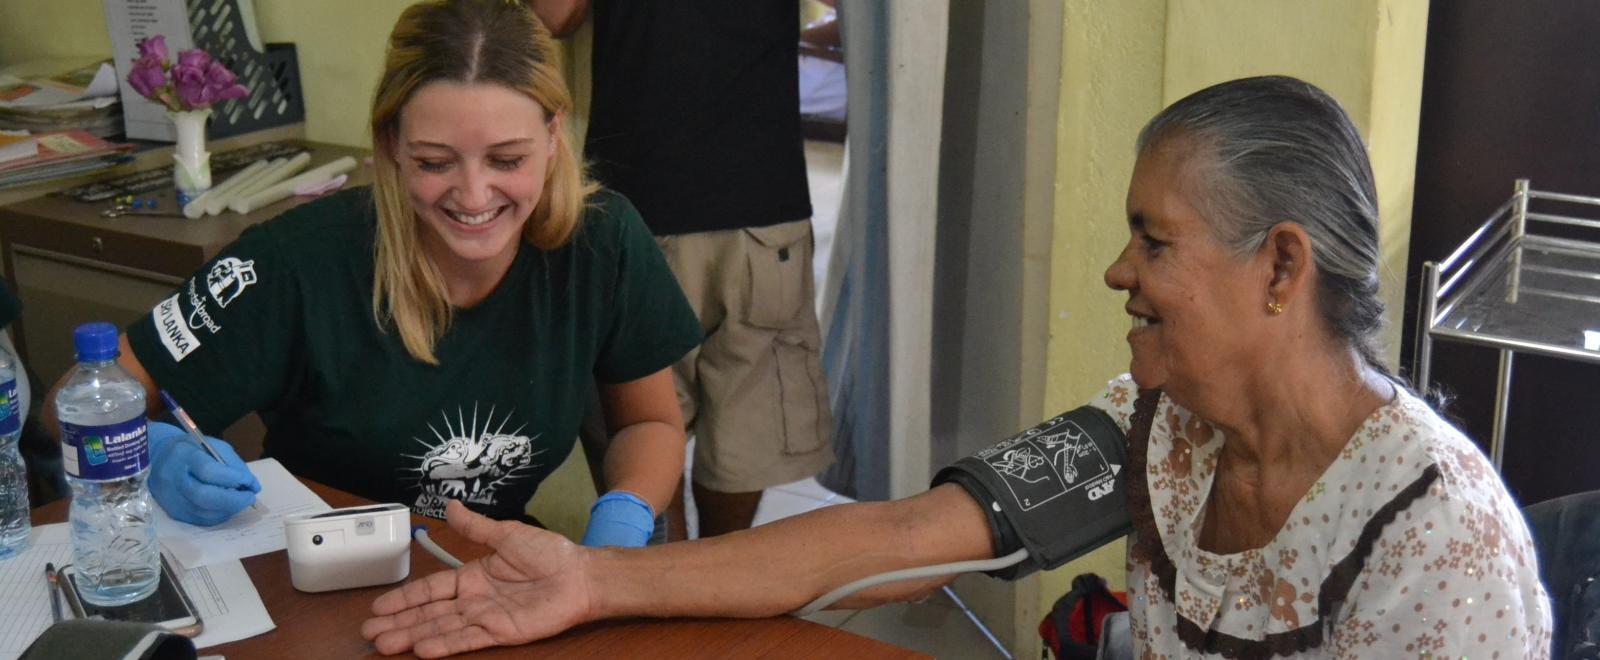 During outreach work in Sri Lanka, a public health intern takes a woman’s blood pressure reading.